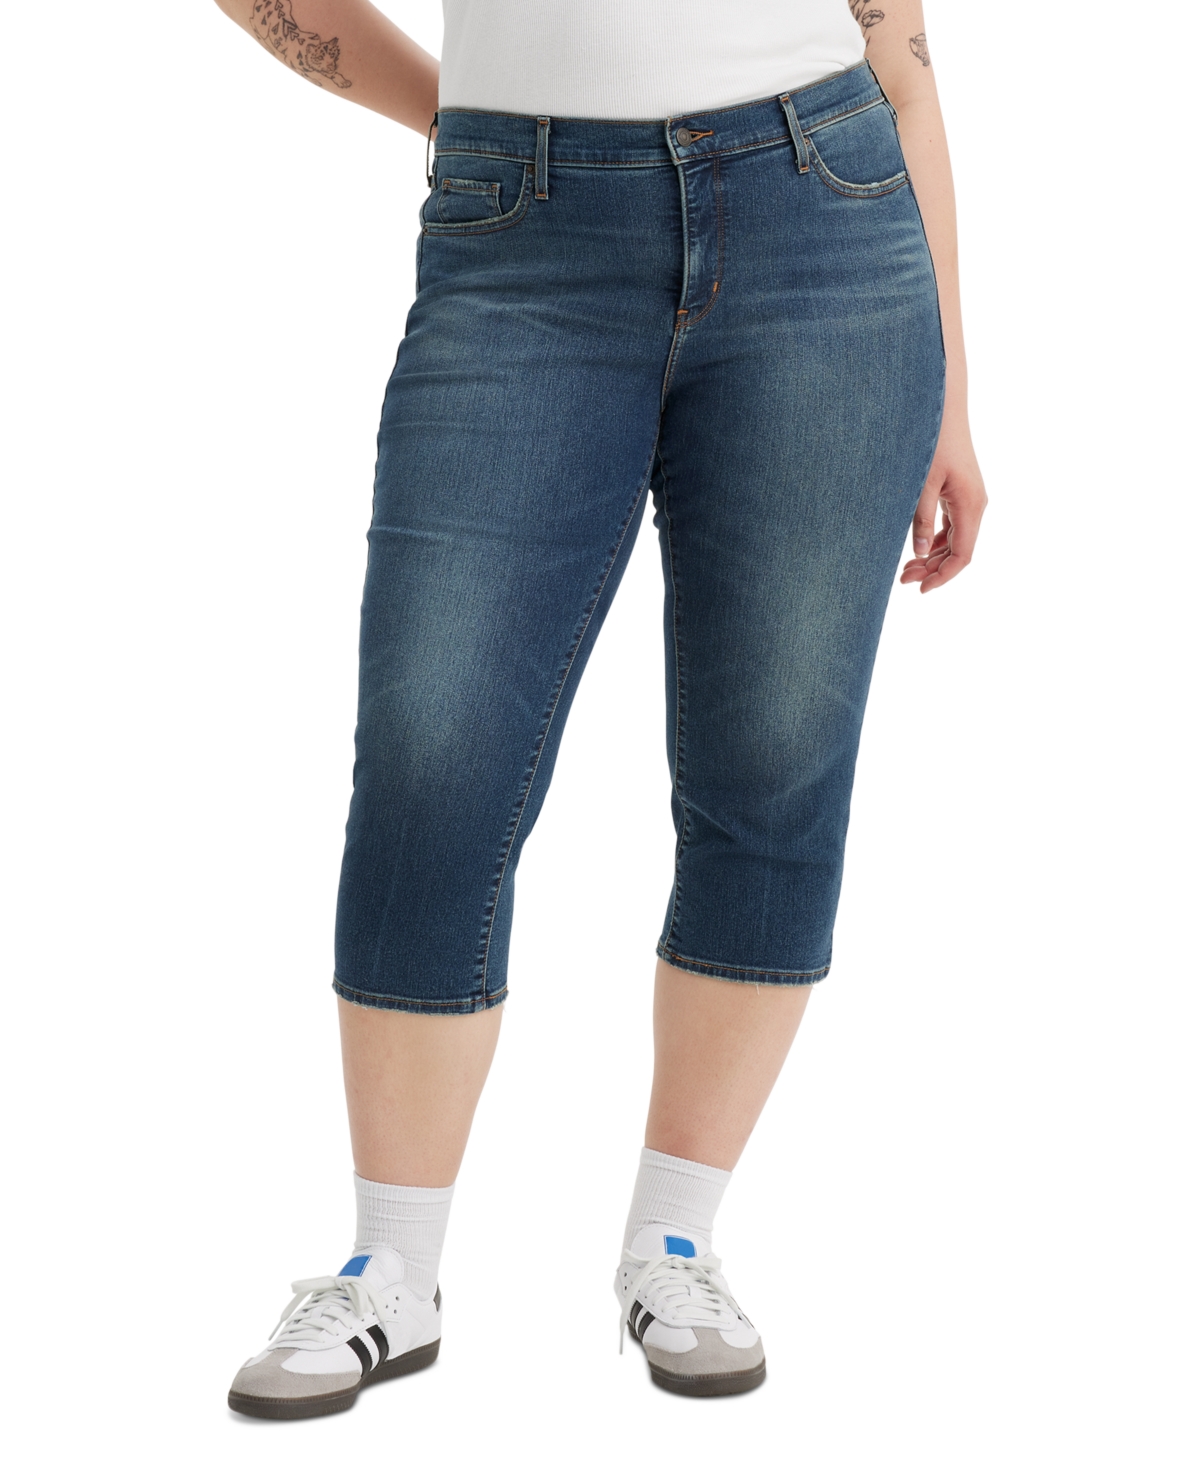 Levi's Trendy Plus Size 311 Shaping Skinny Capri Jeans In Everyday Adventure